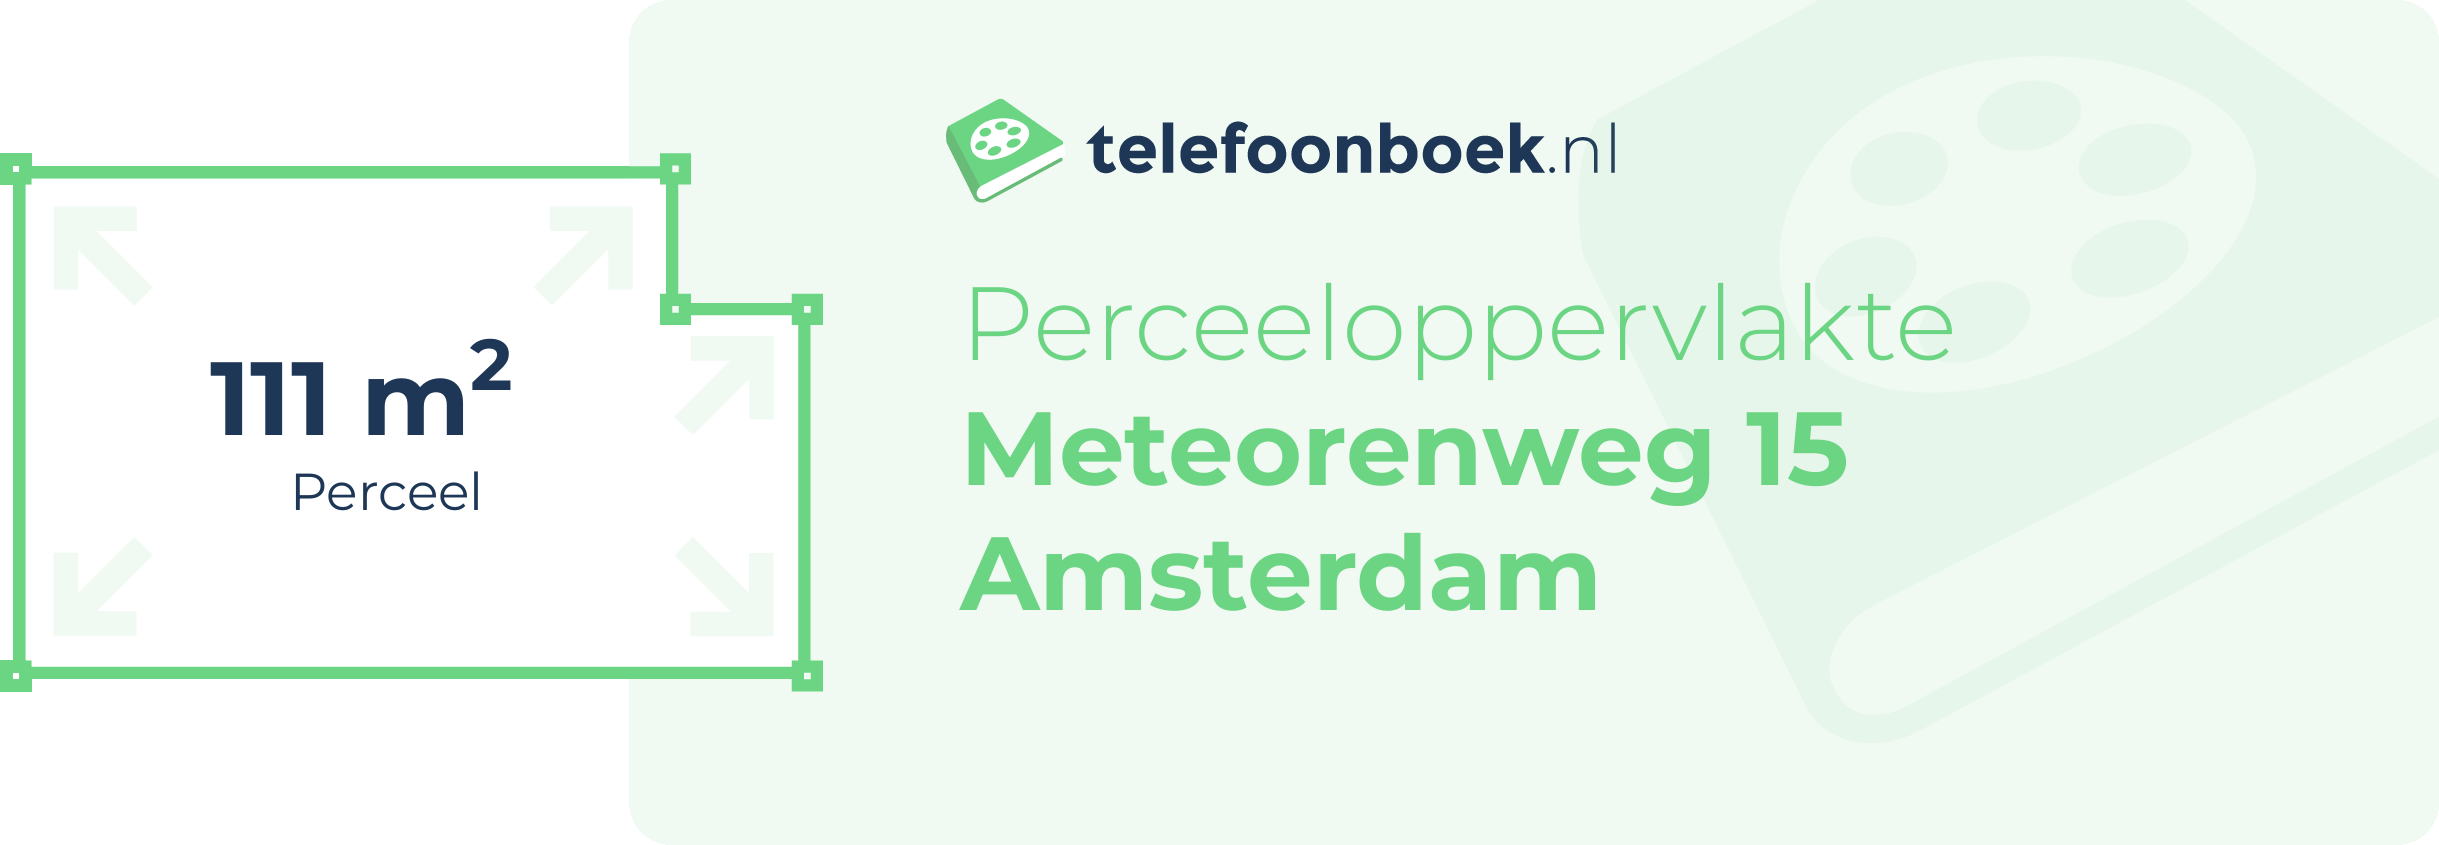 Perceeloppervlakte Meteorenweg 15 Amsterdam